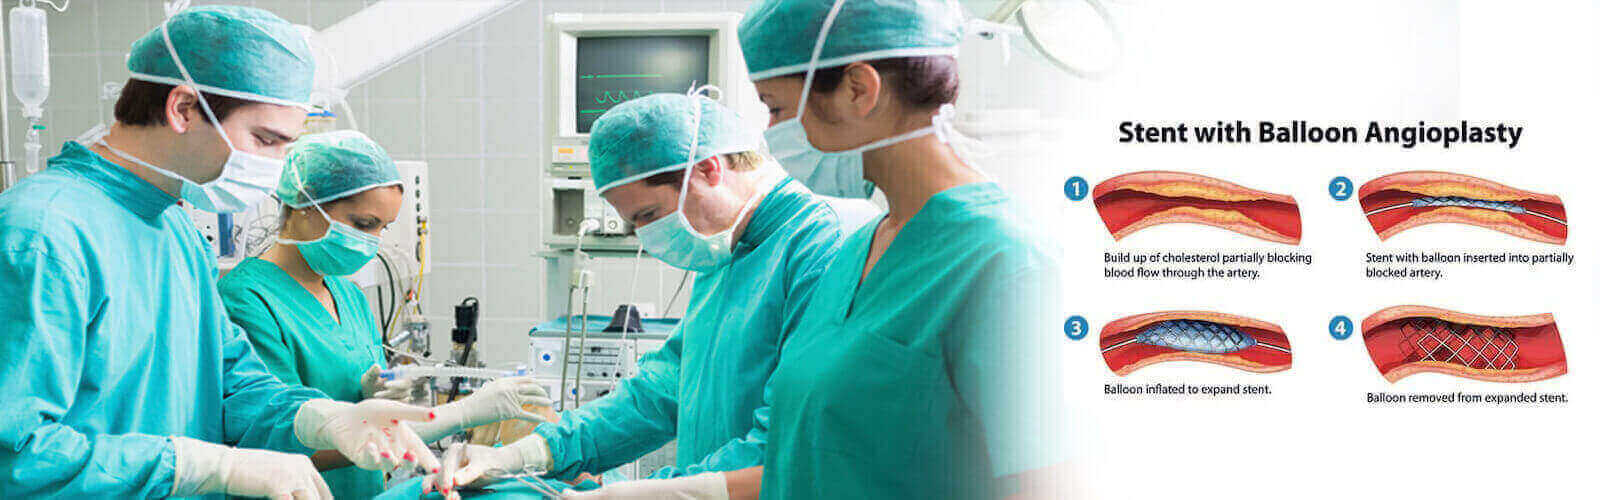 Angioplasty Surgery in United Kingdom